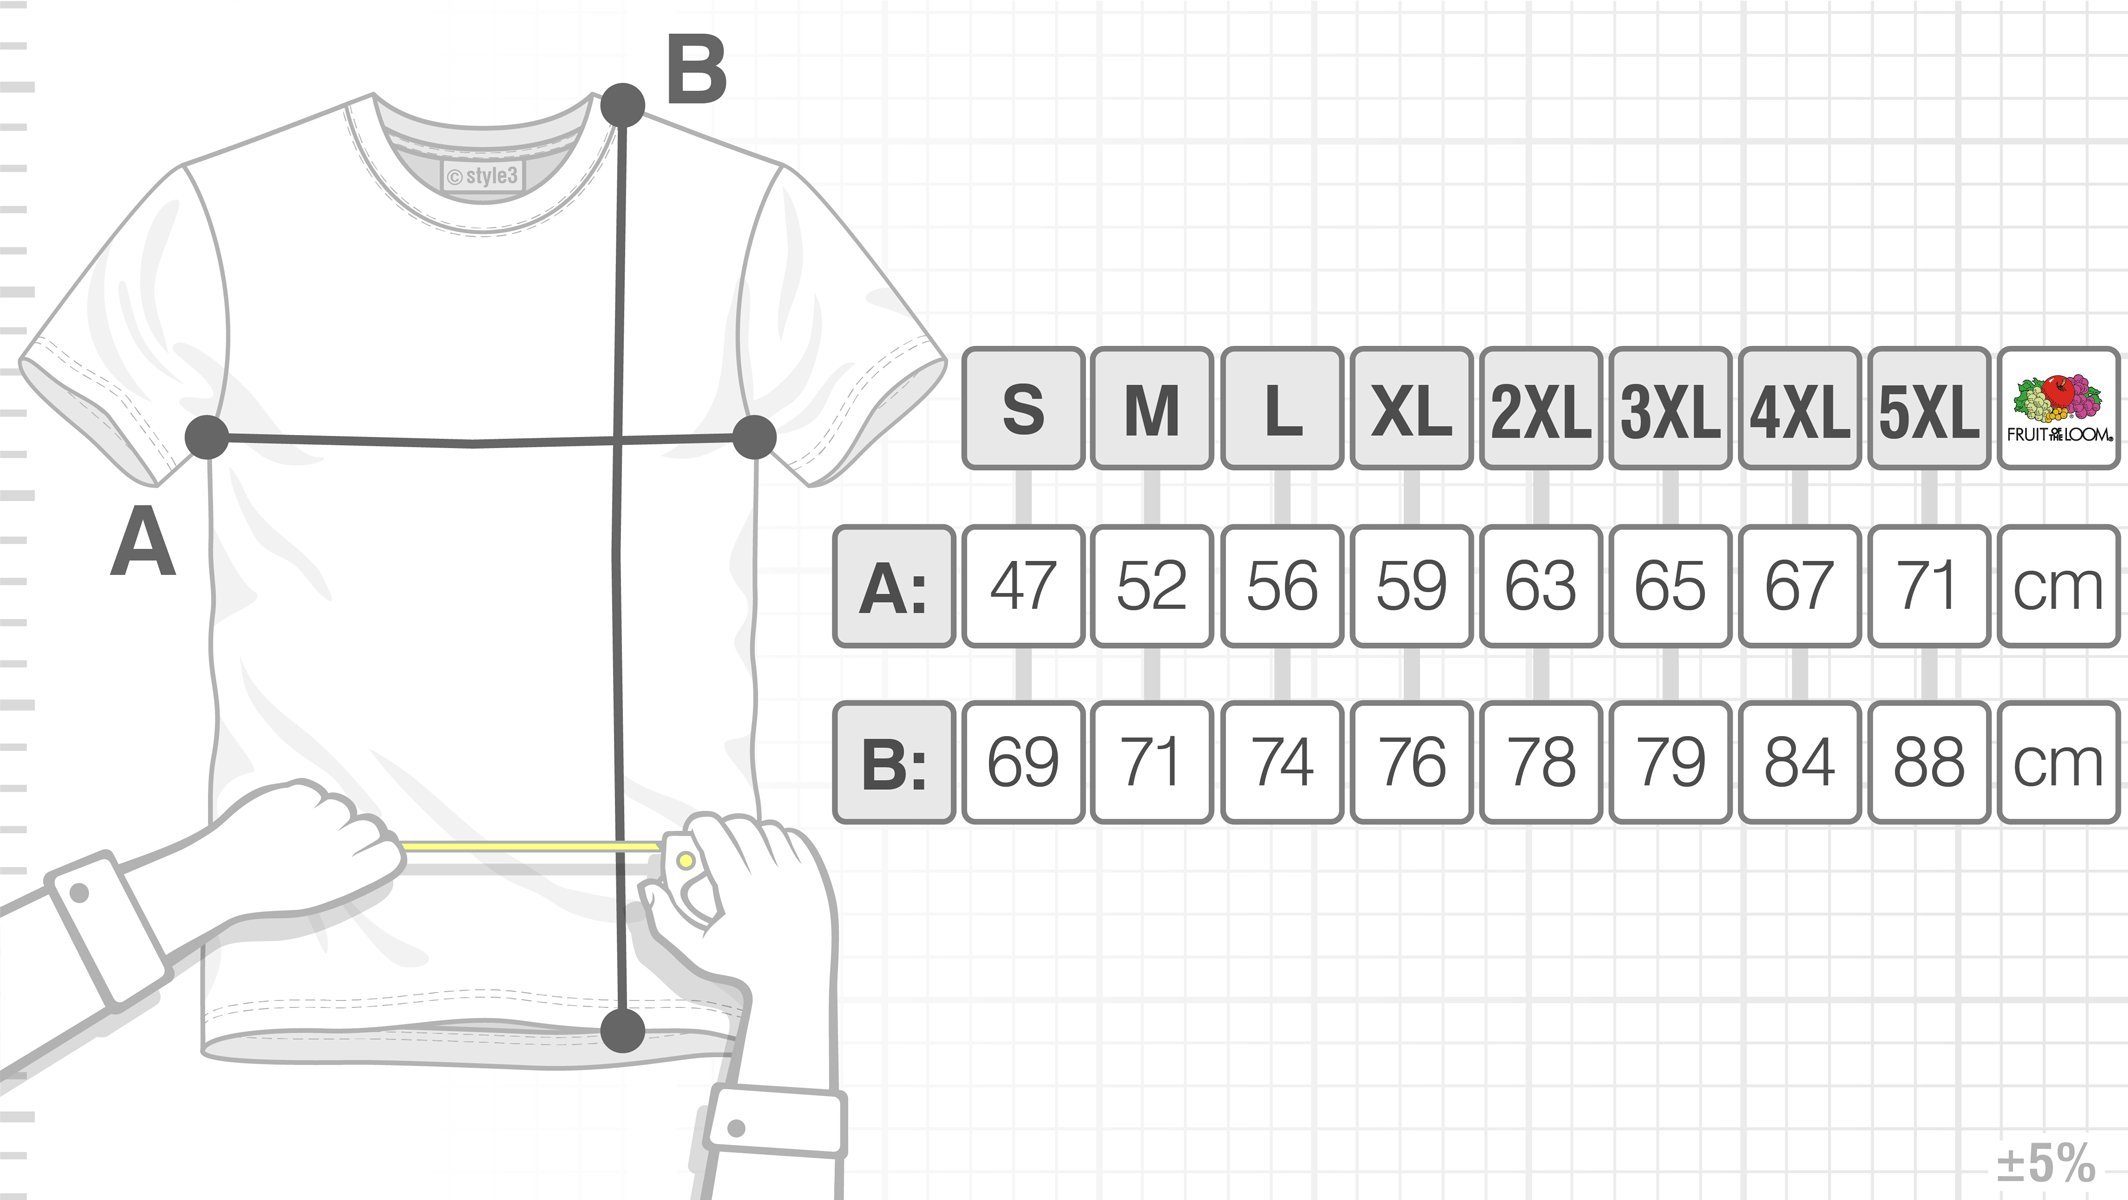 style3 Print-Shirt Herren T-Shirt Bang geo Escher Cooper Penrose Sheldon schwarz Dreieck Theory Big Würfel